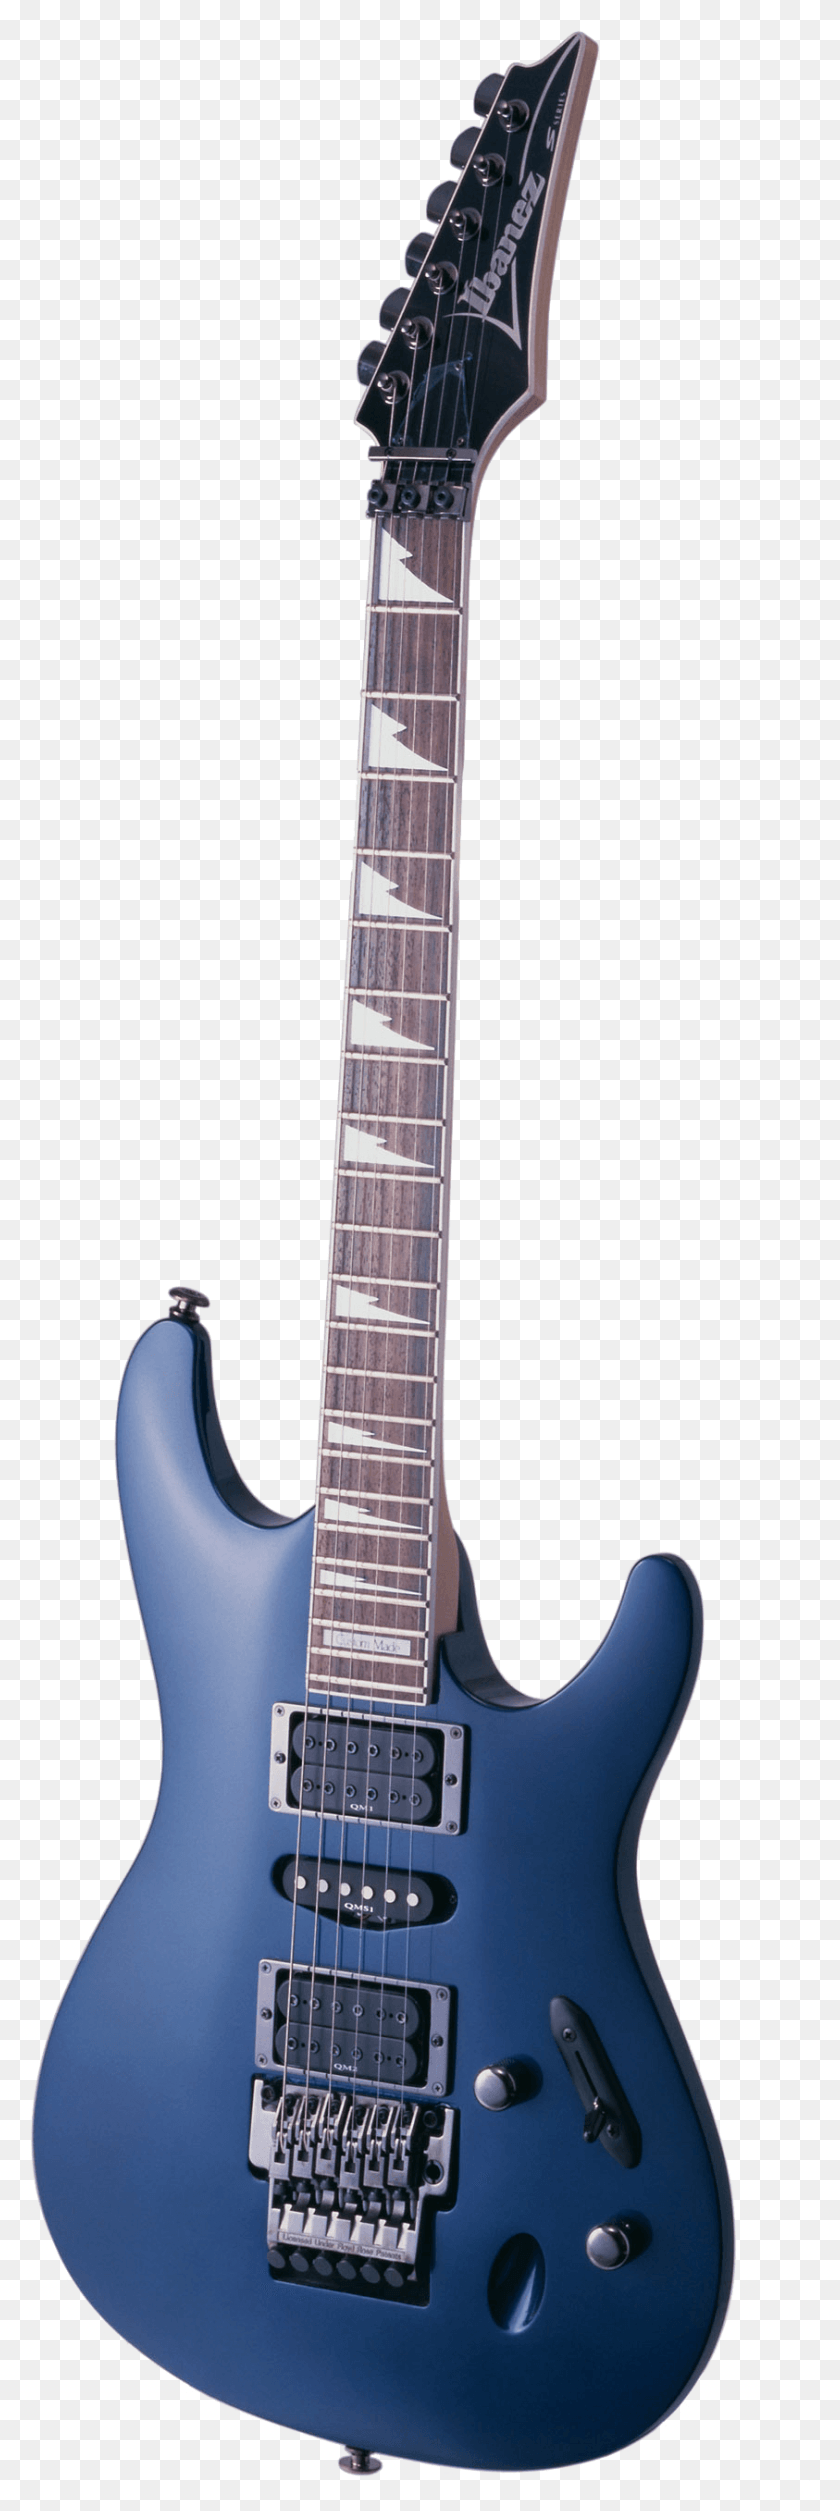 843x2650 Descargar Png Guitarra Ibanez Guitarra, Actividades De Ocio, Instrumento Musical, Guitarra Eléctrica Hd Png